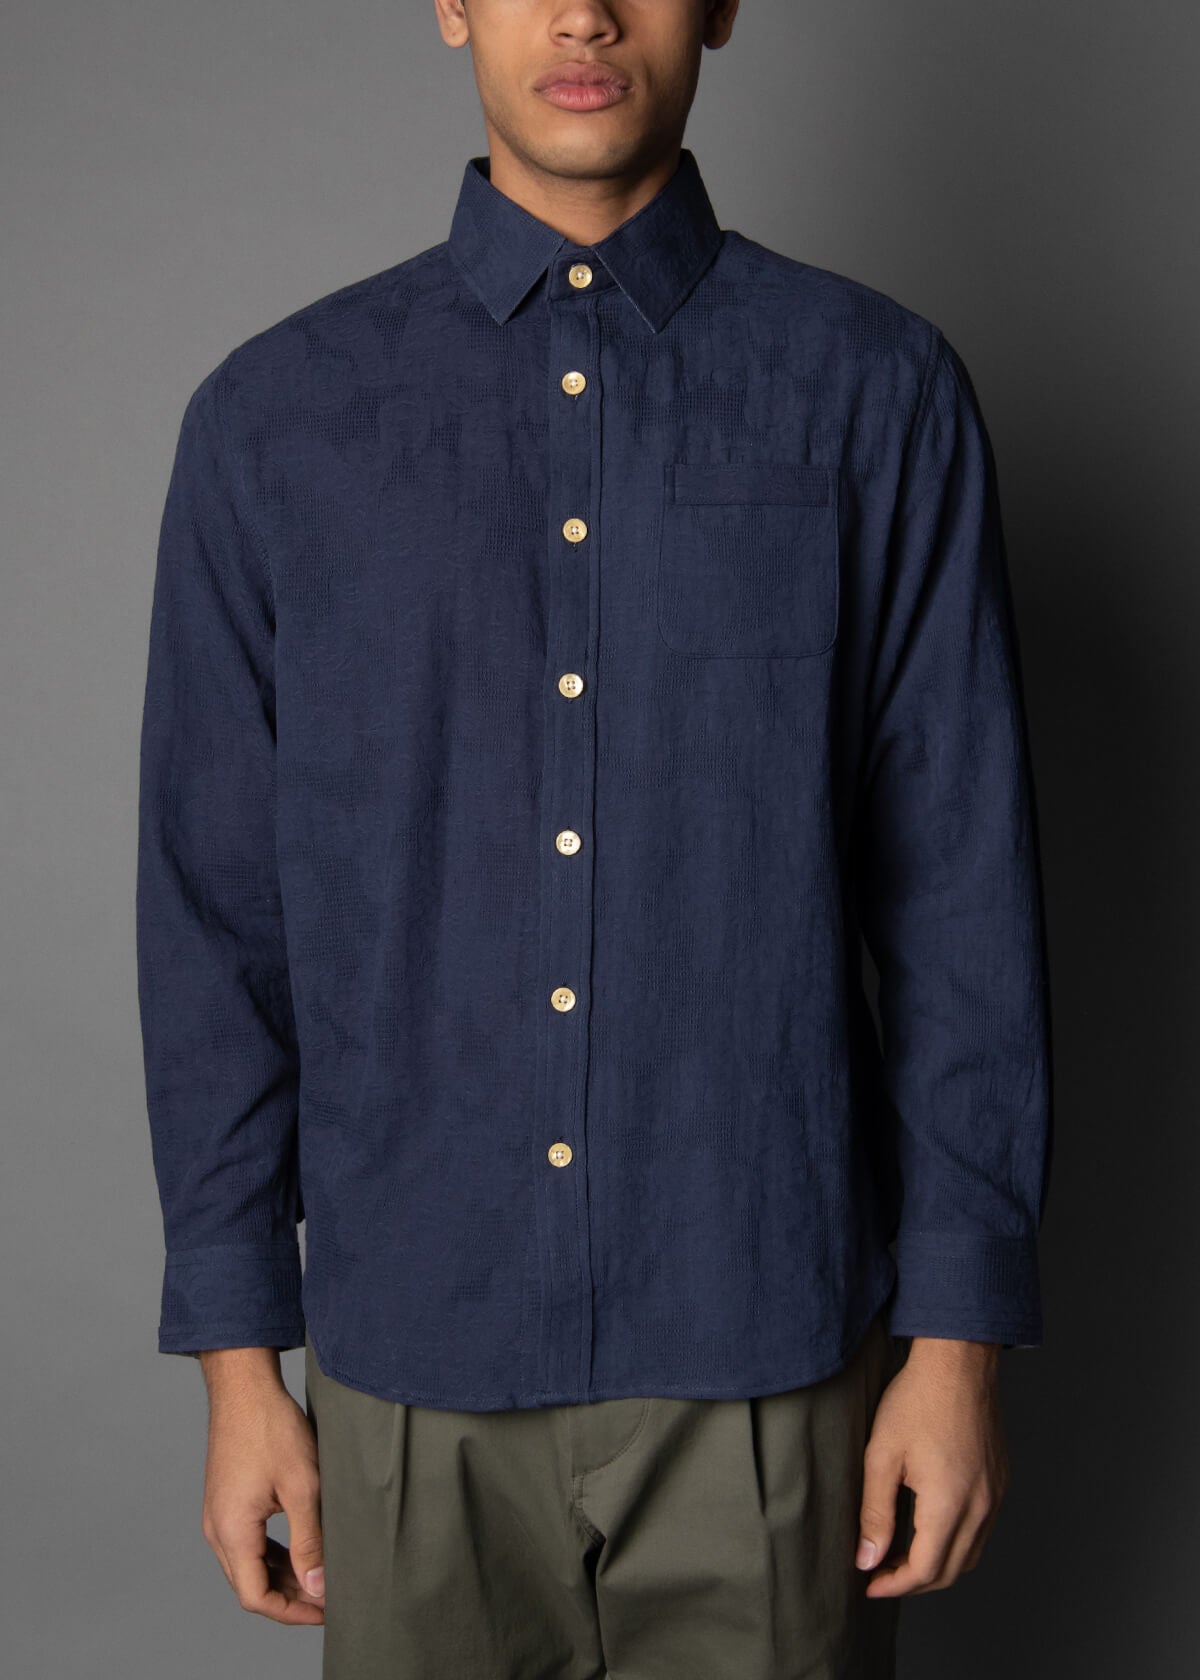 navy blue woven jacquard shirt for men